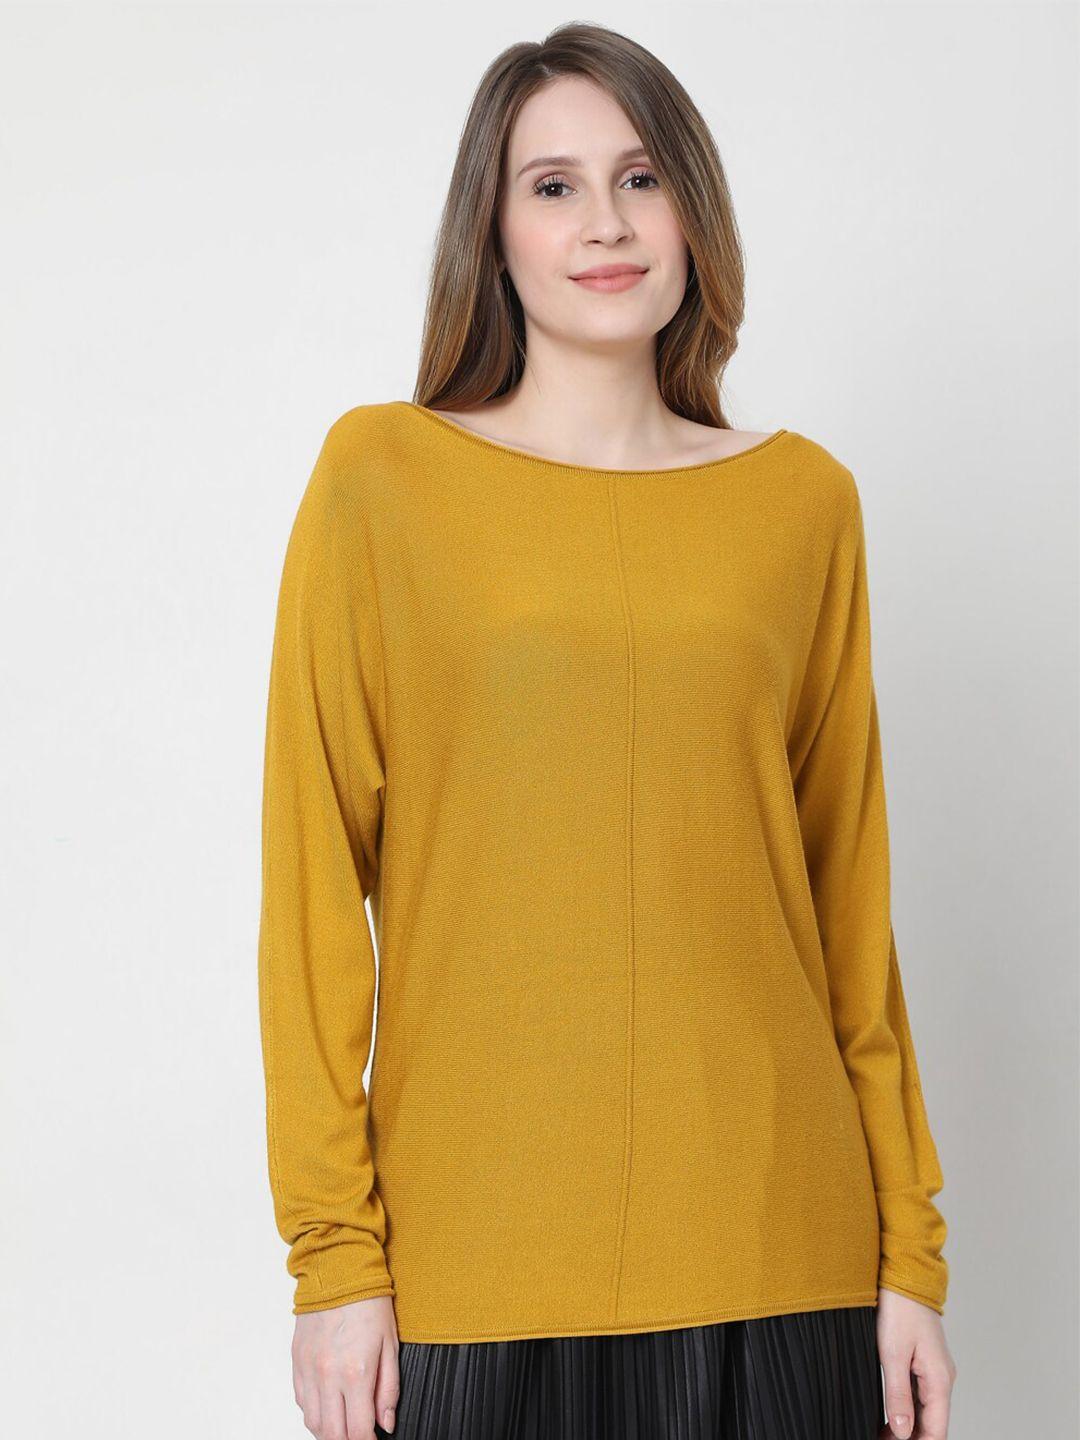 vero moda women gold-toned solid pullover sweater